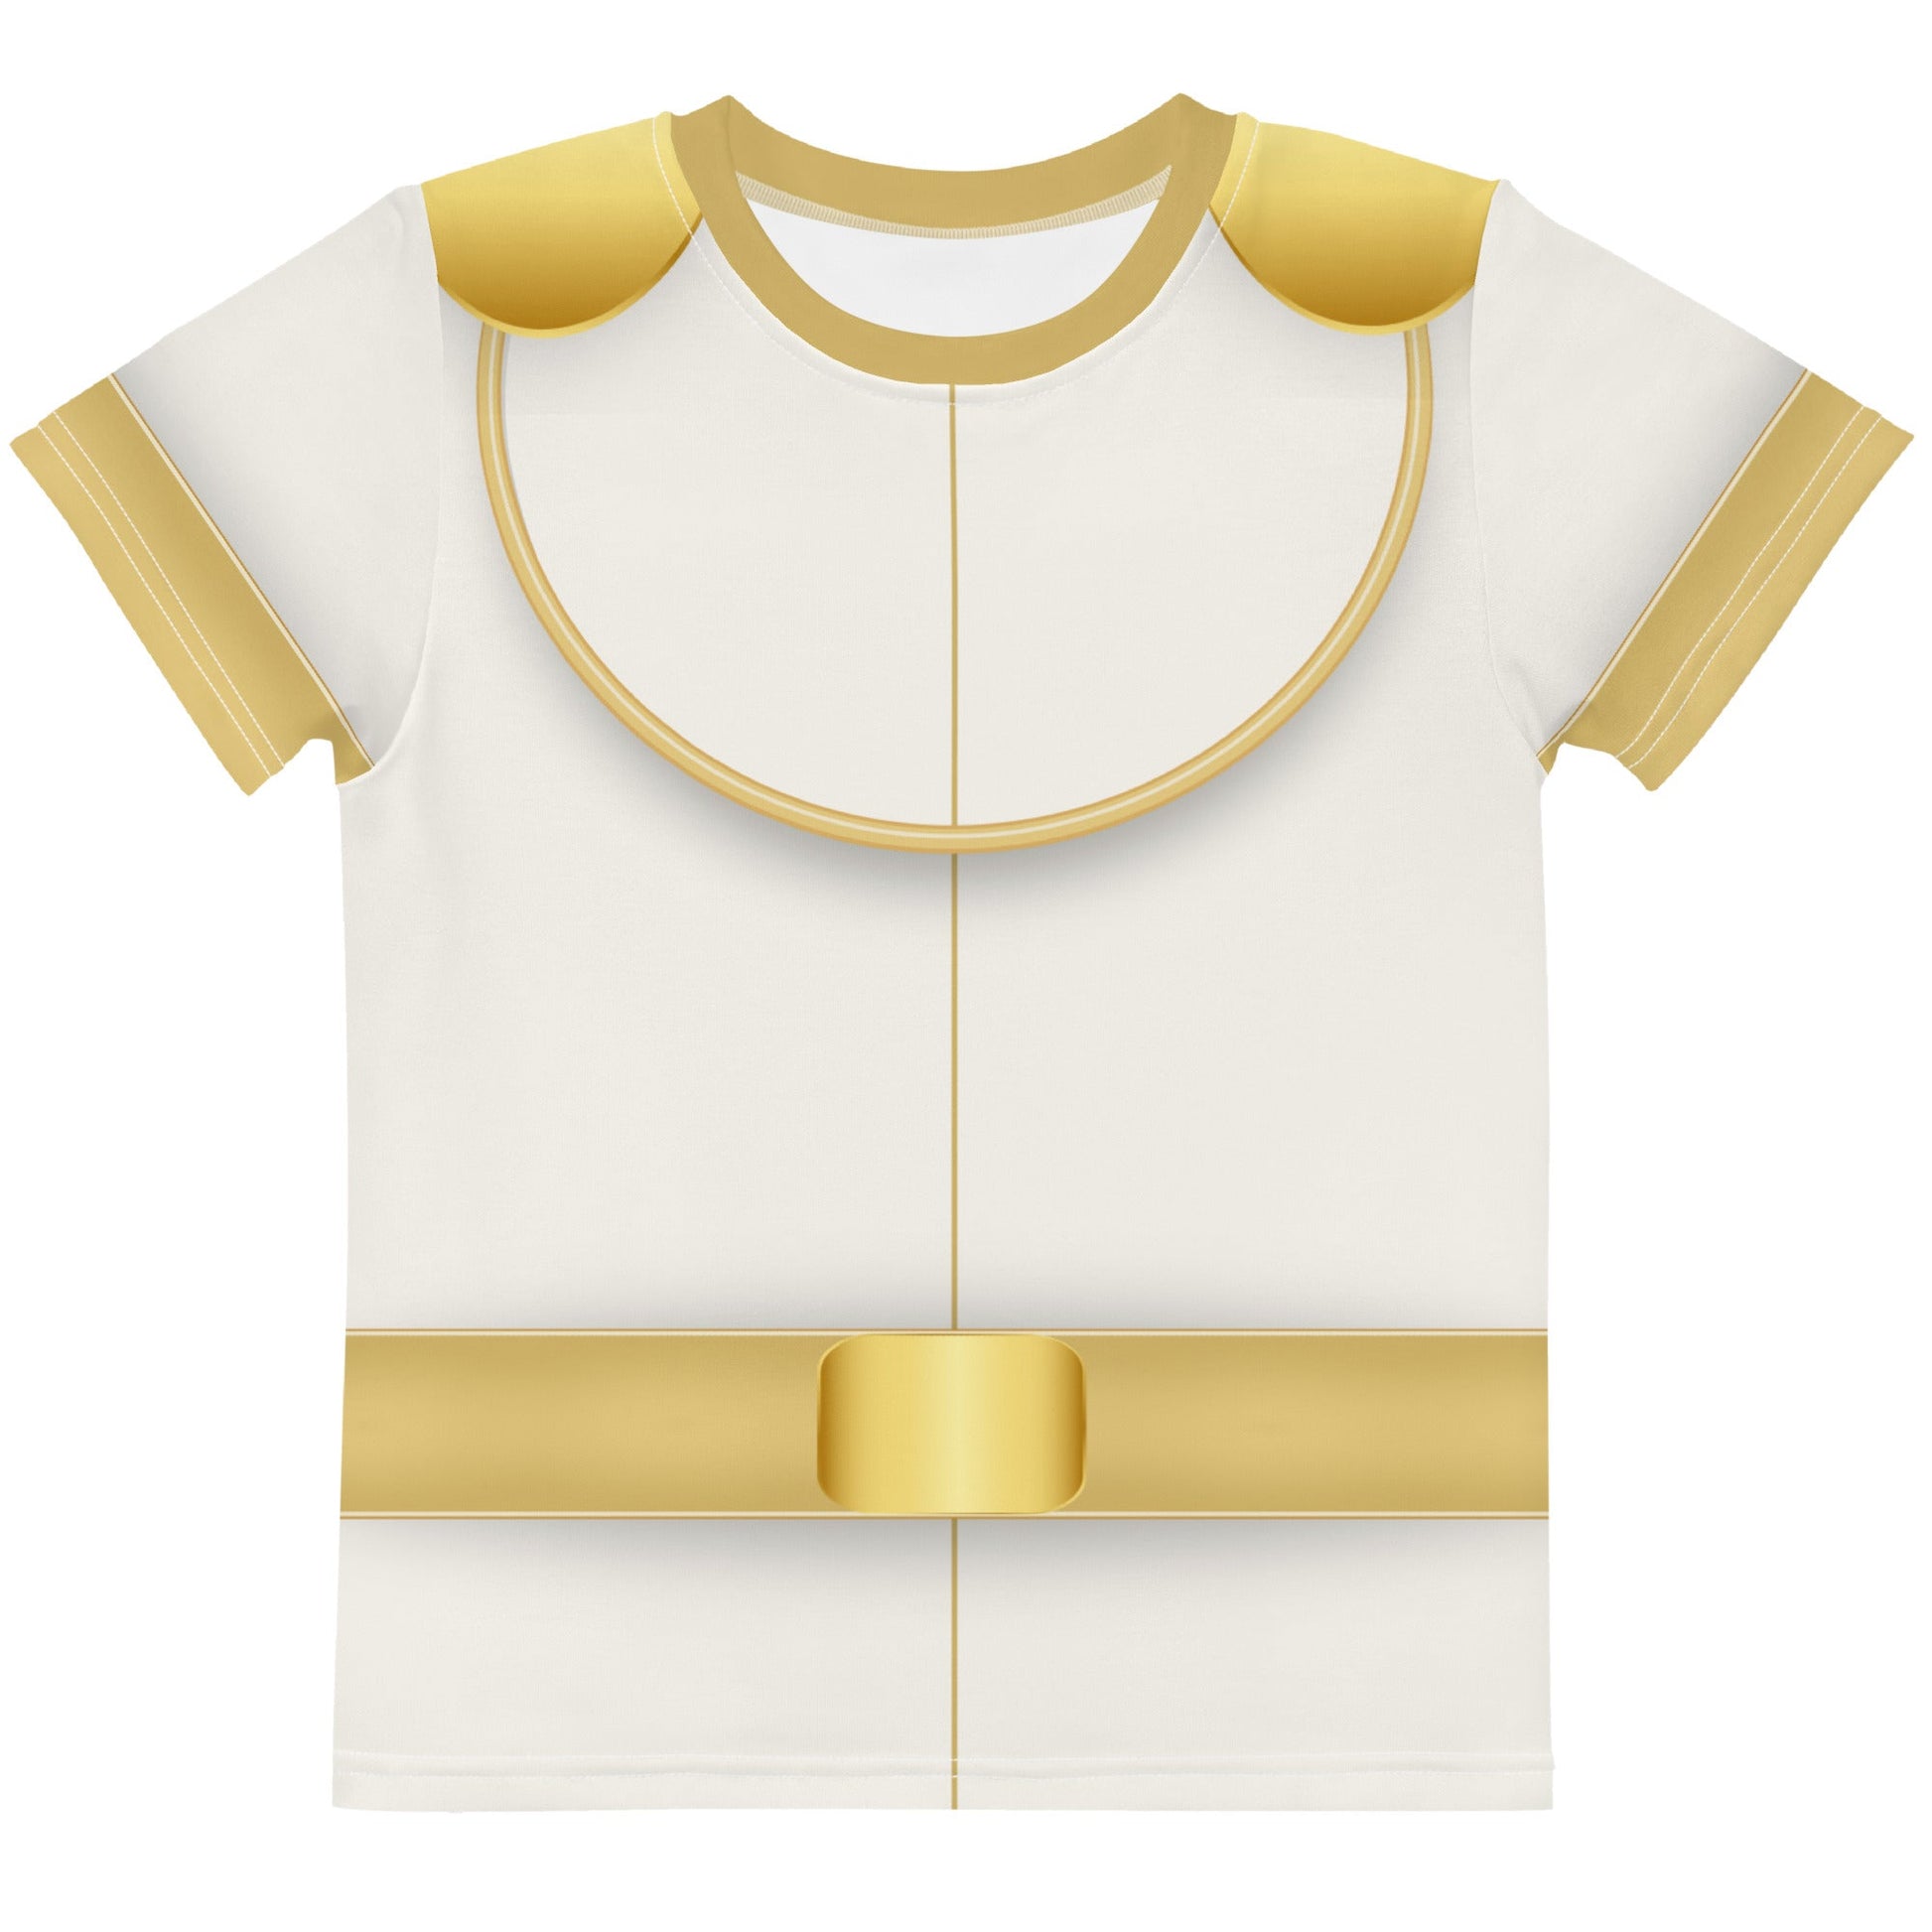 Charming Prince Kids crew neck t-shirt cinderella costumedisney cosplaydisney halloween#tag4##tag5##tag6#